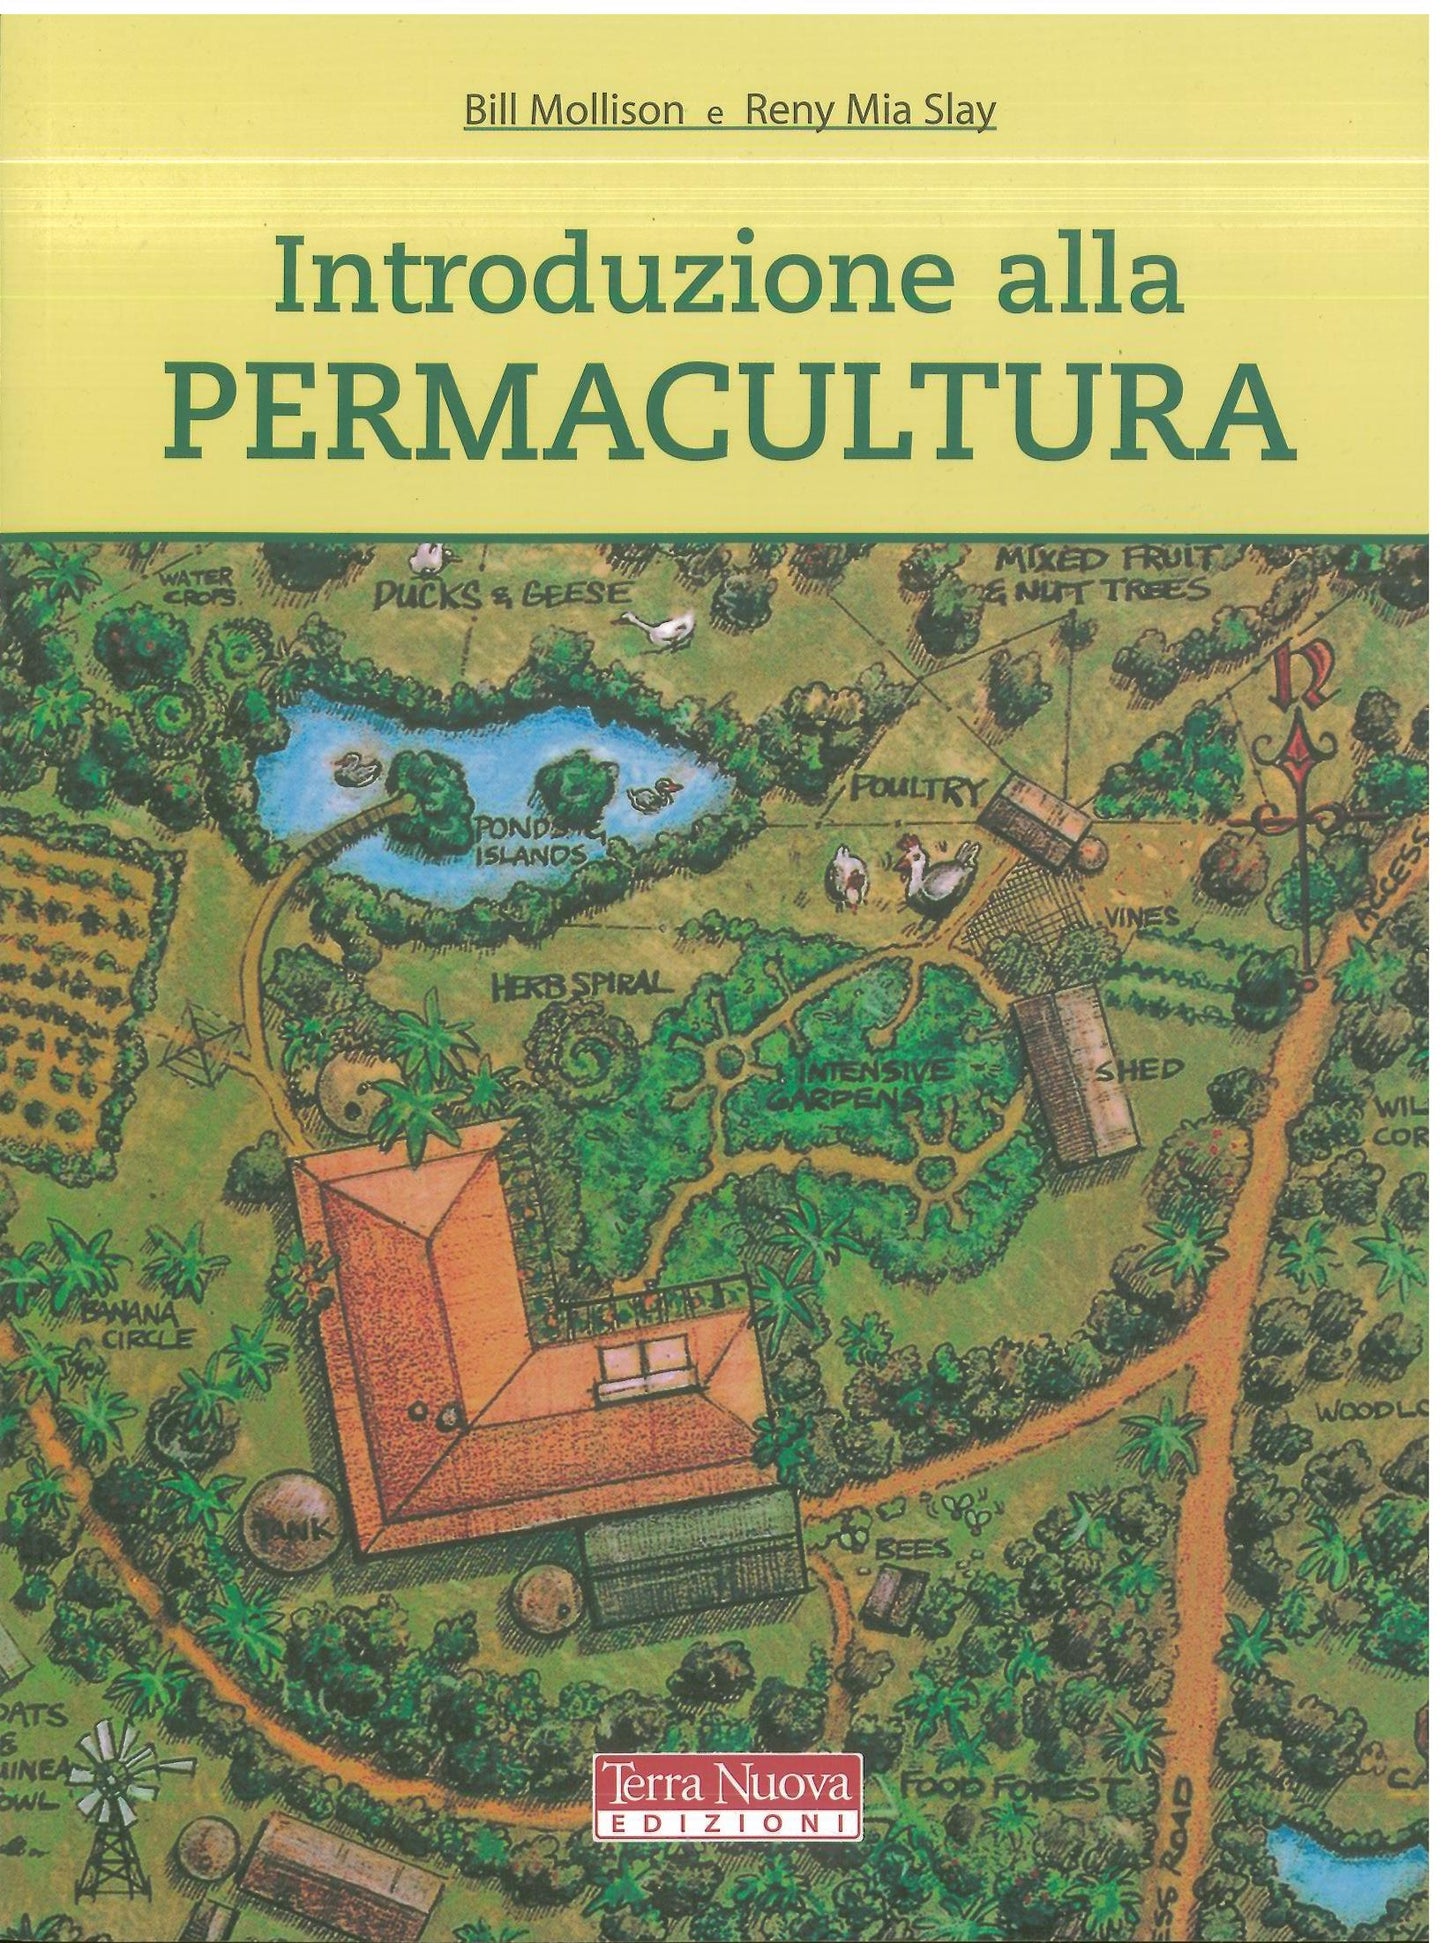 Introduzione alla permacultura - Mollison B. & Slay R.M.